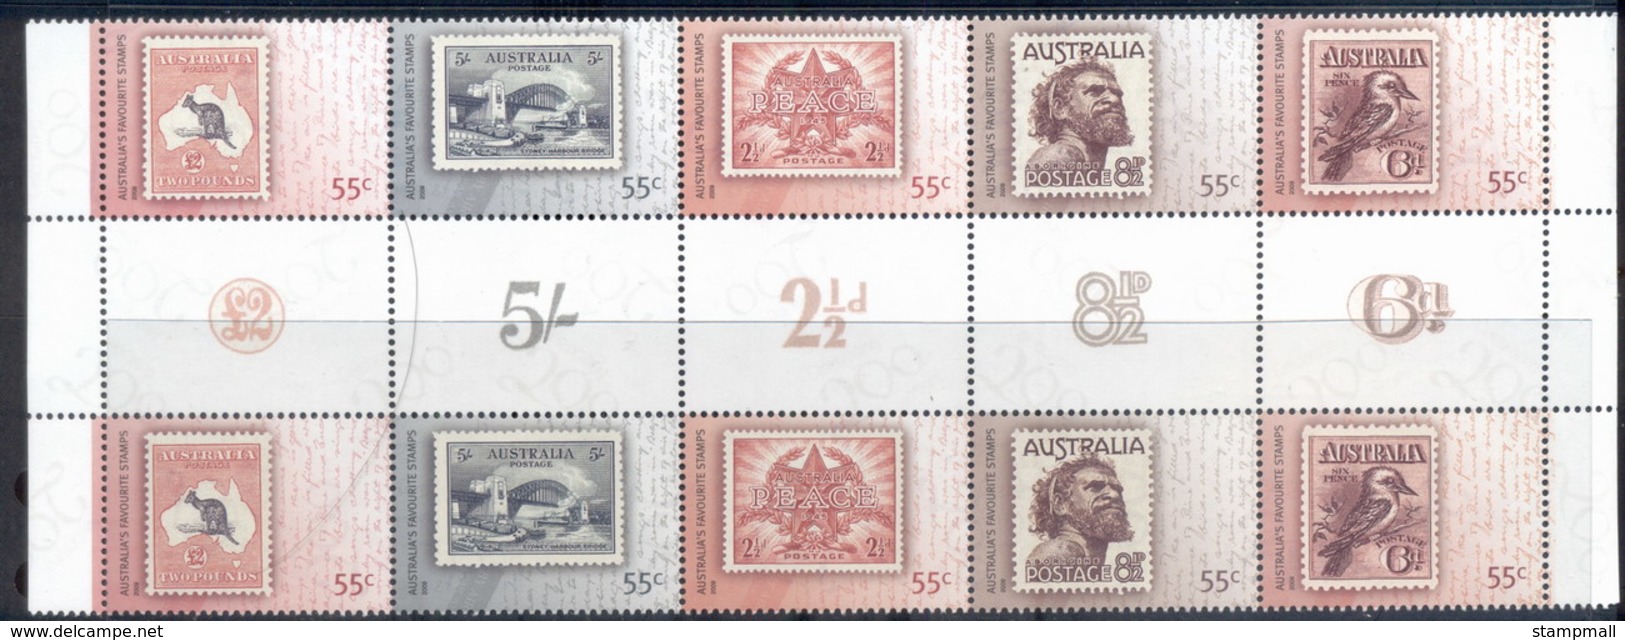 Australia 2009 Australia's Favourite Stamps Gutter Blk10 MUH - Mint Stamps